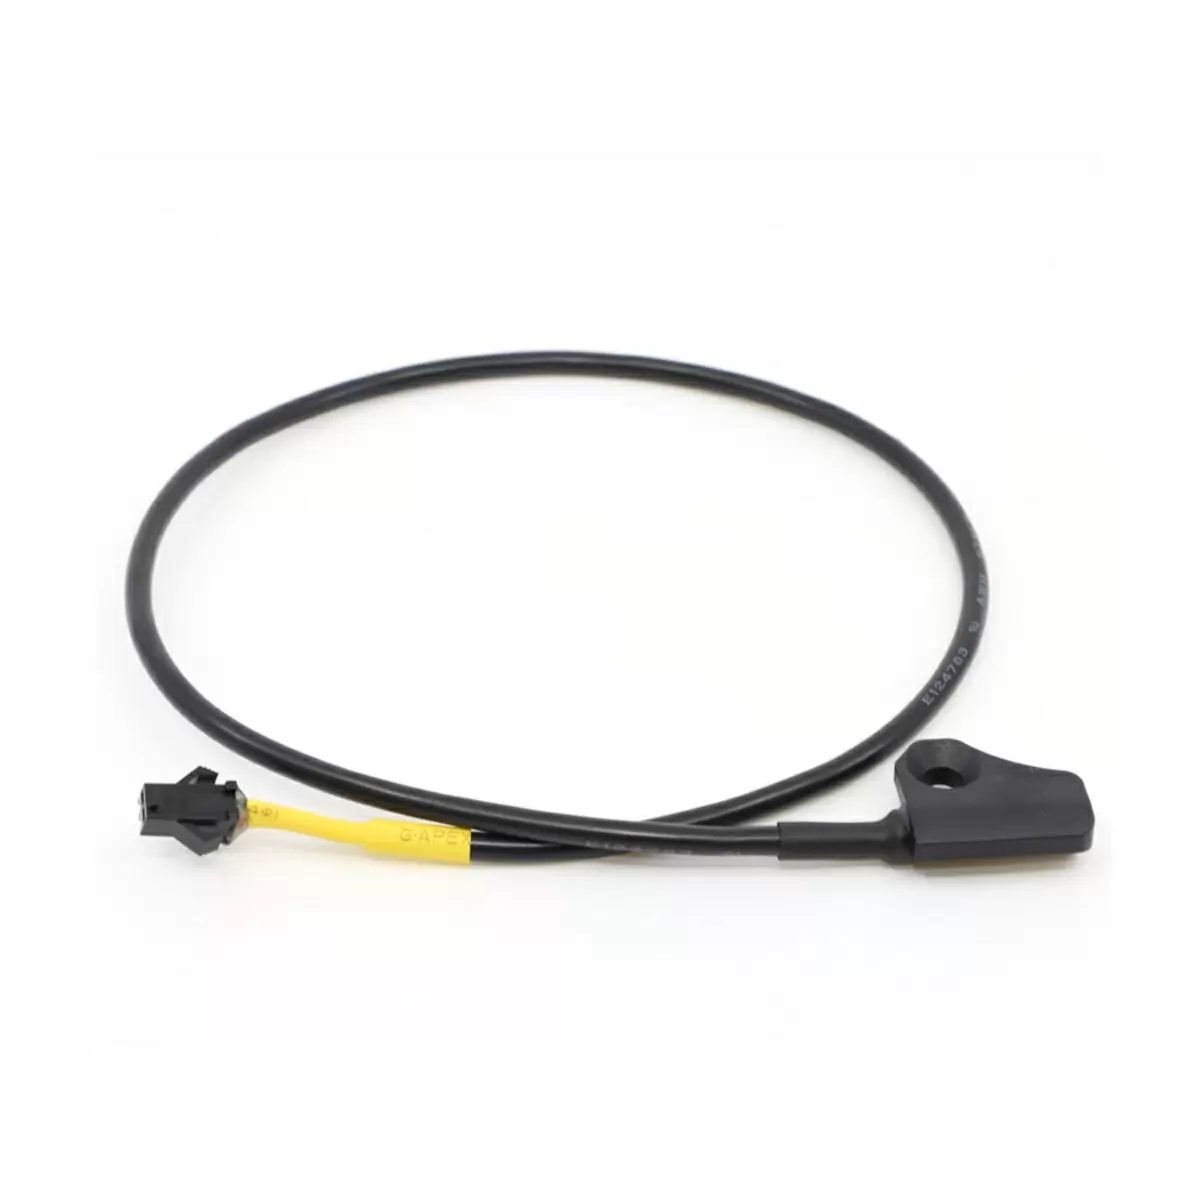 Speed Sensor Cable for ebike Powerplay  Instinct Altitude Growler - image